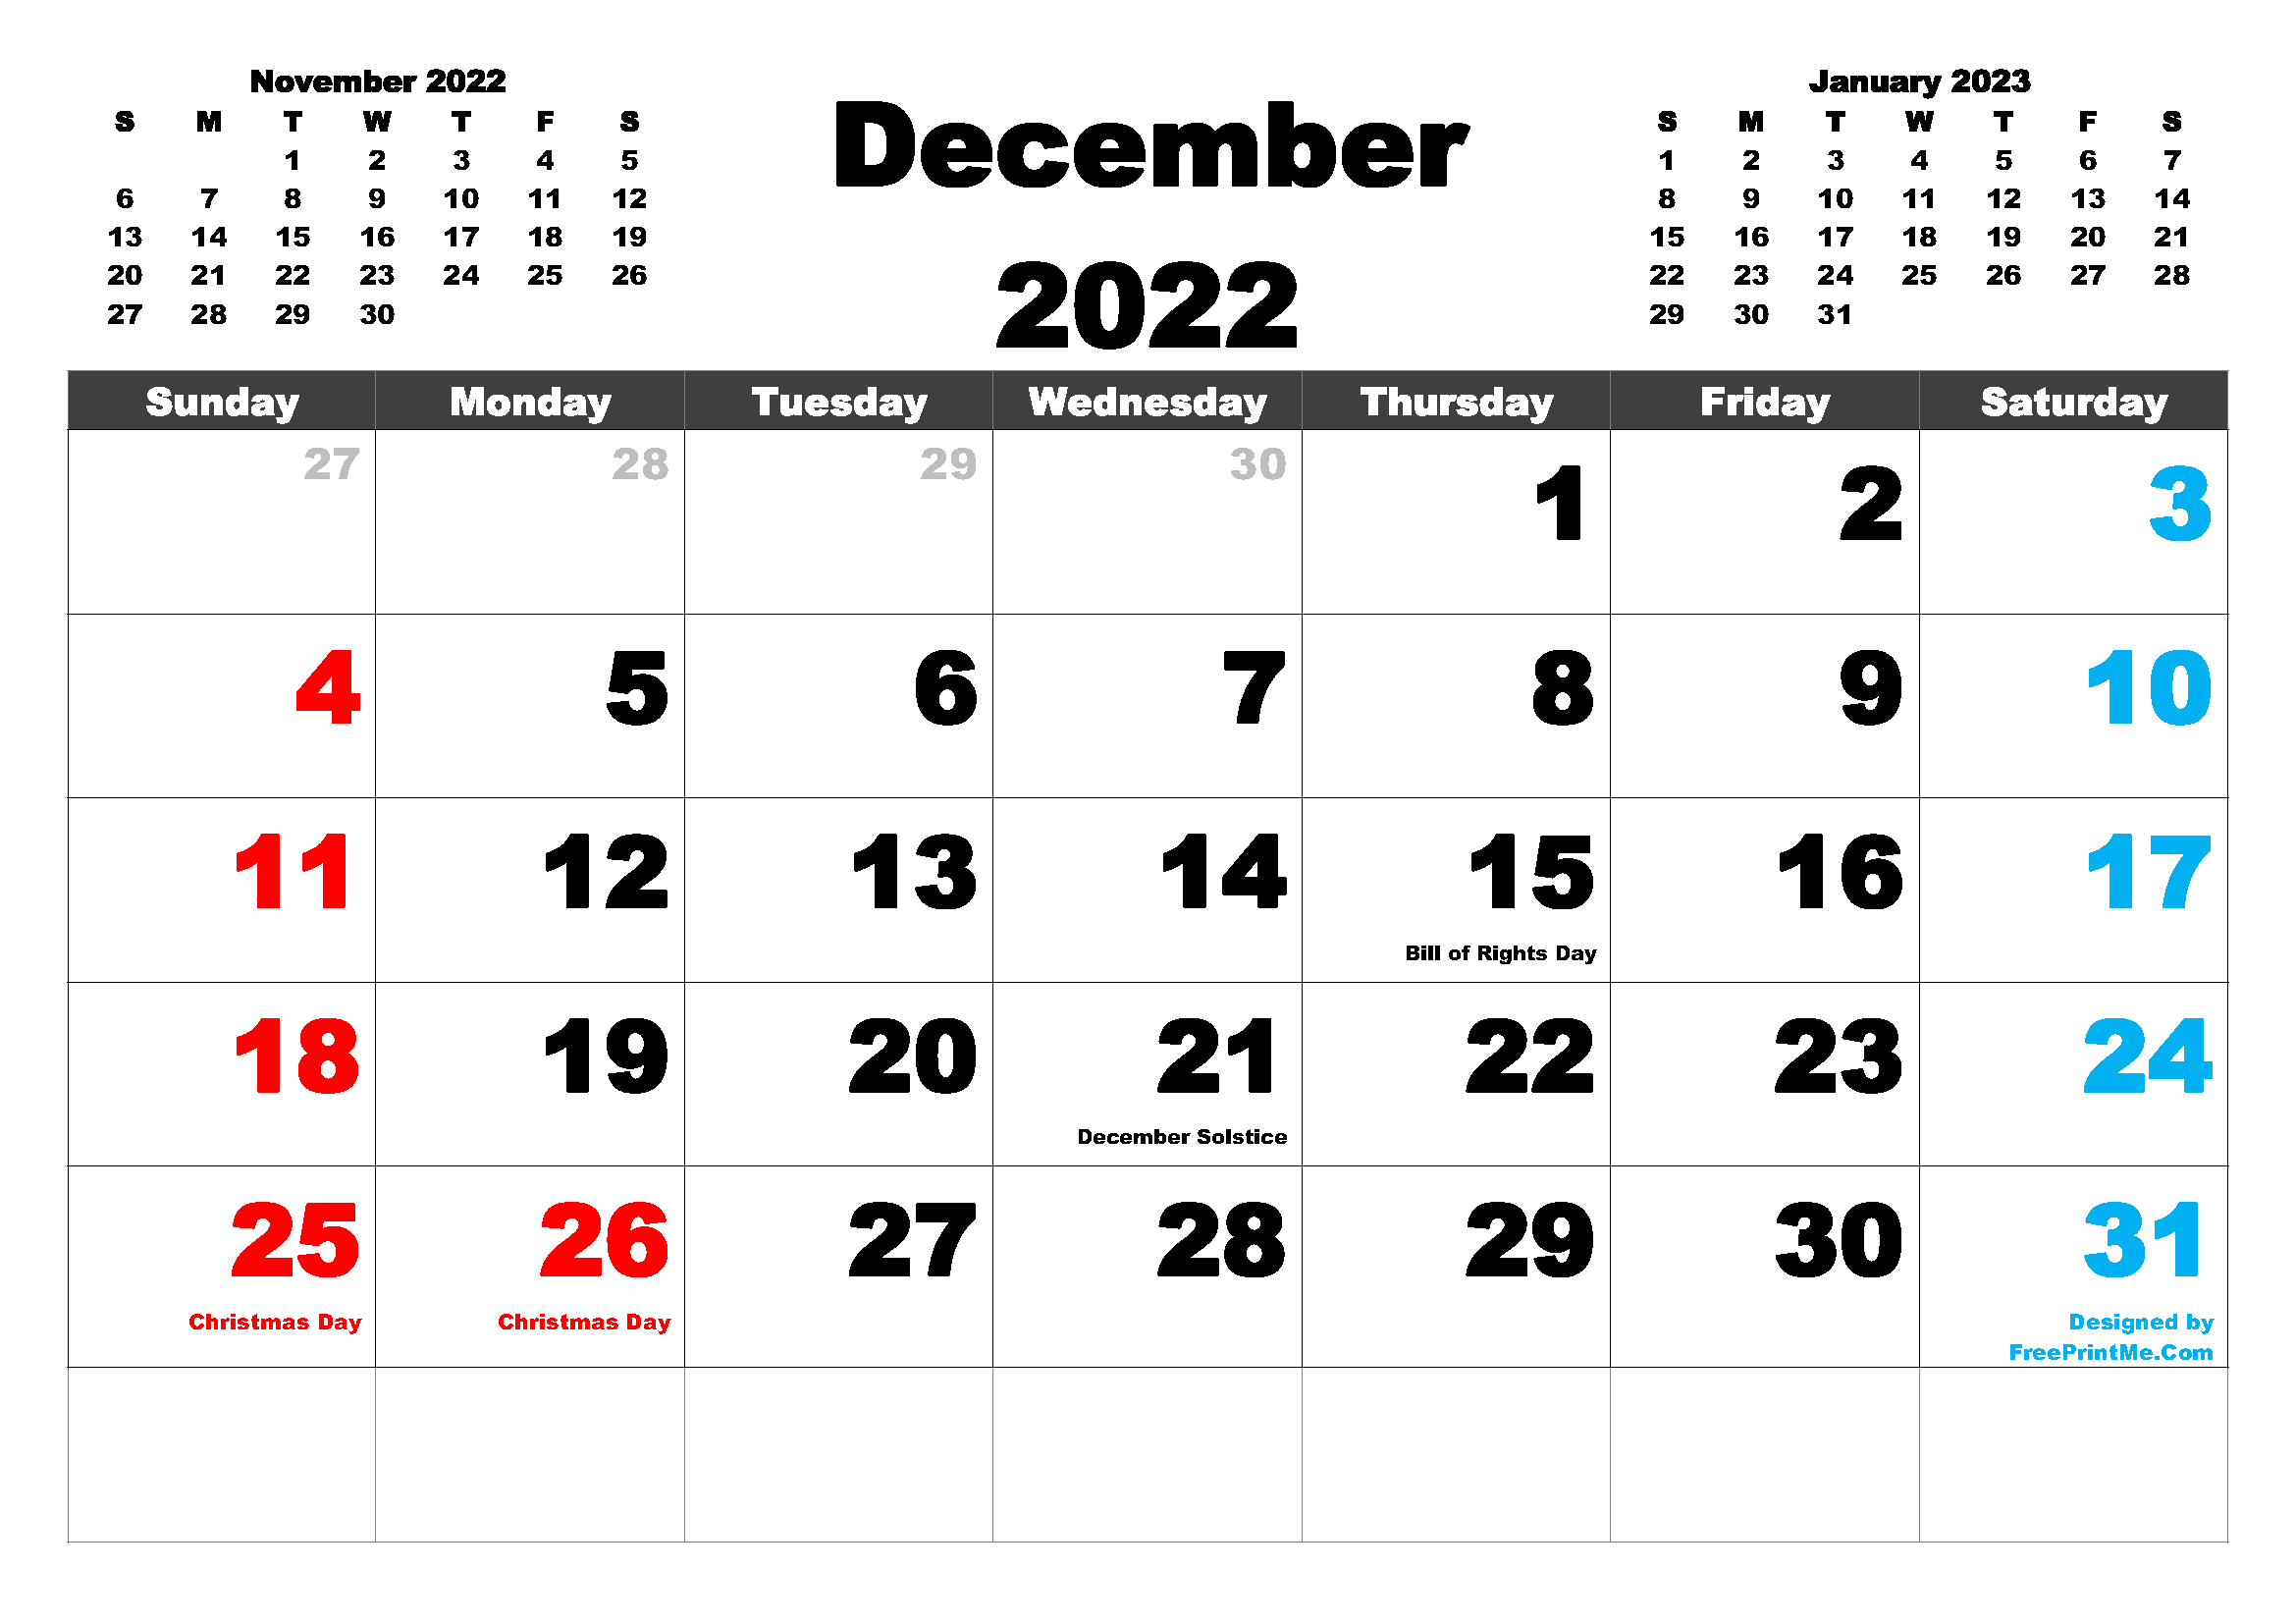 December 2022 Calendar Template Free Printable December 2022 Calendar Pdf, Png Image